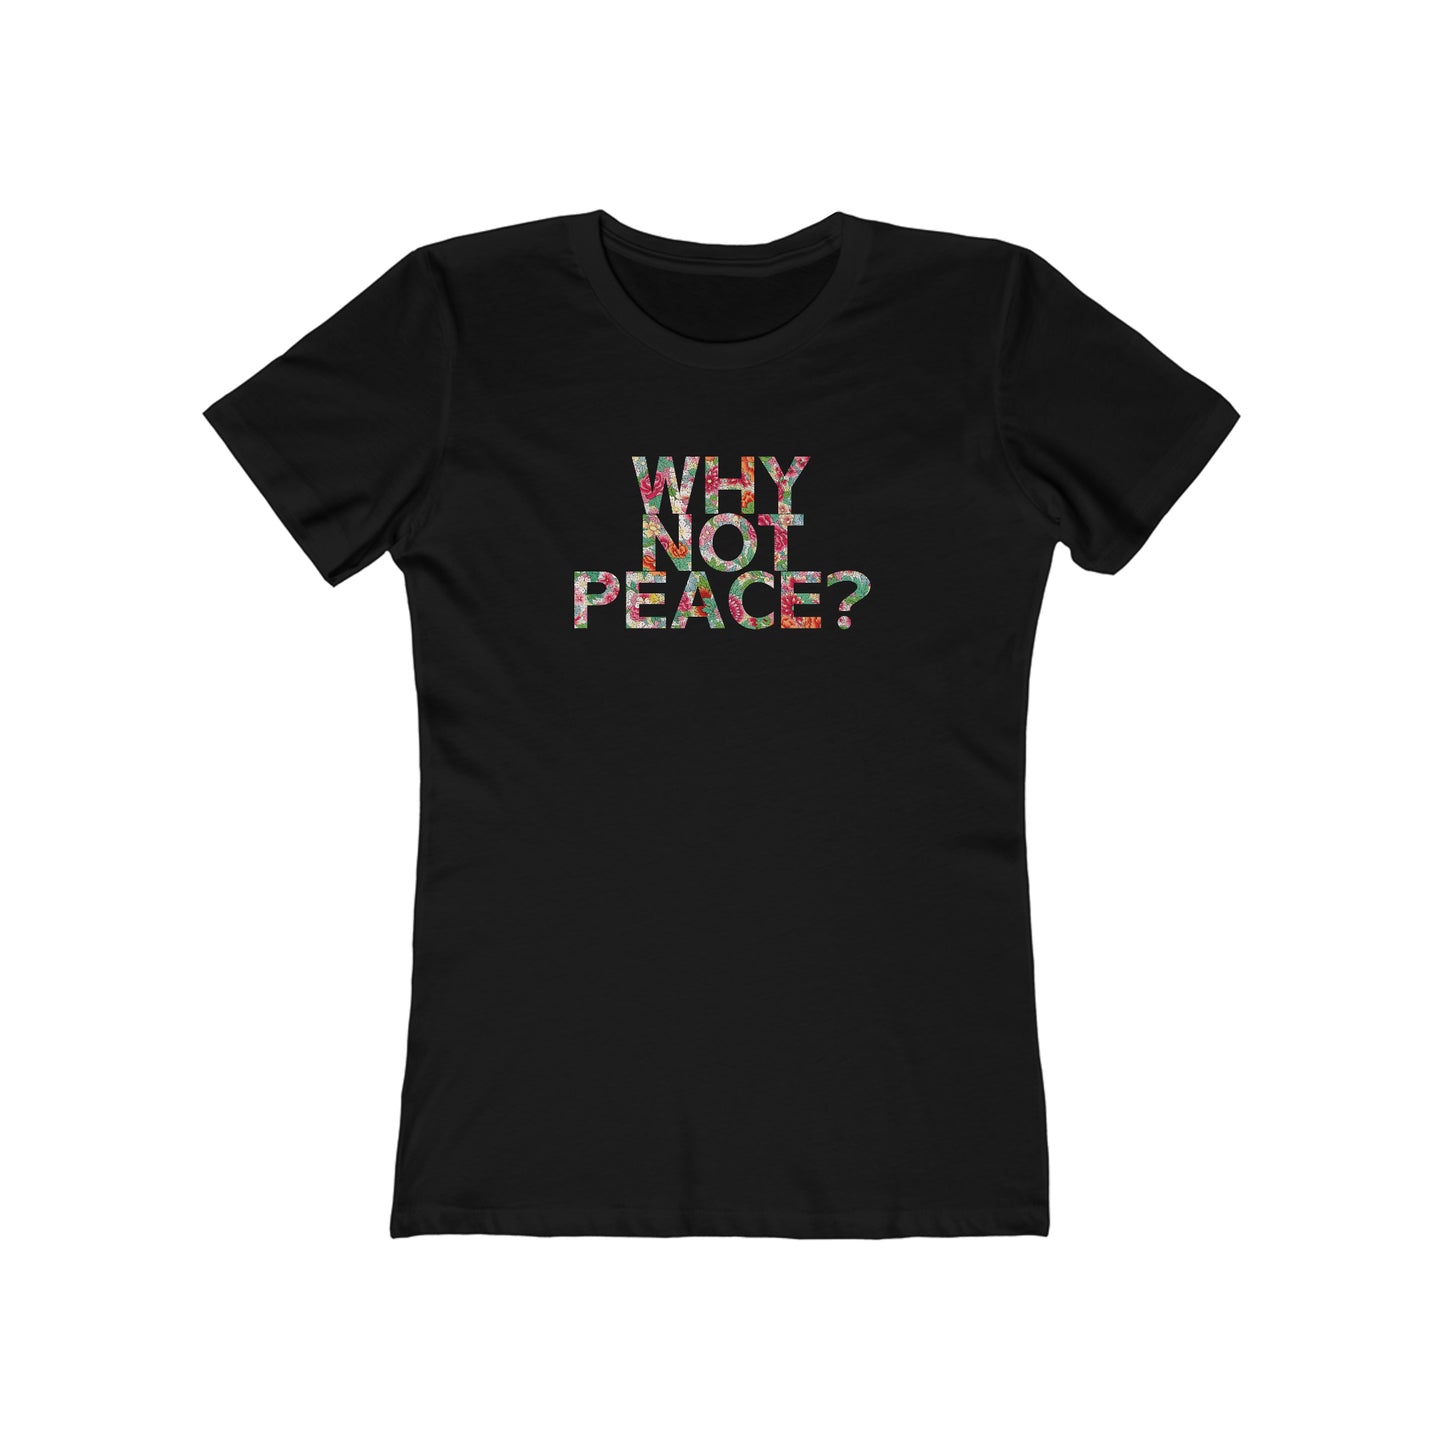 Why Not Peace? - Women's T-Shirt